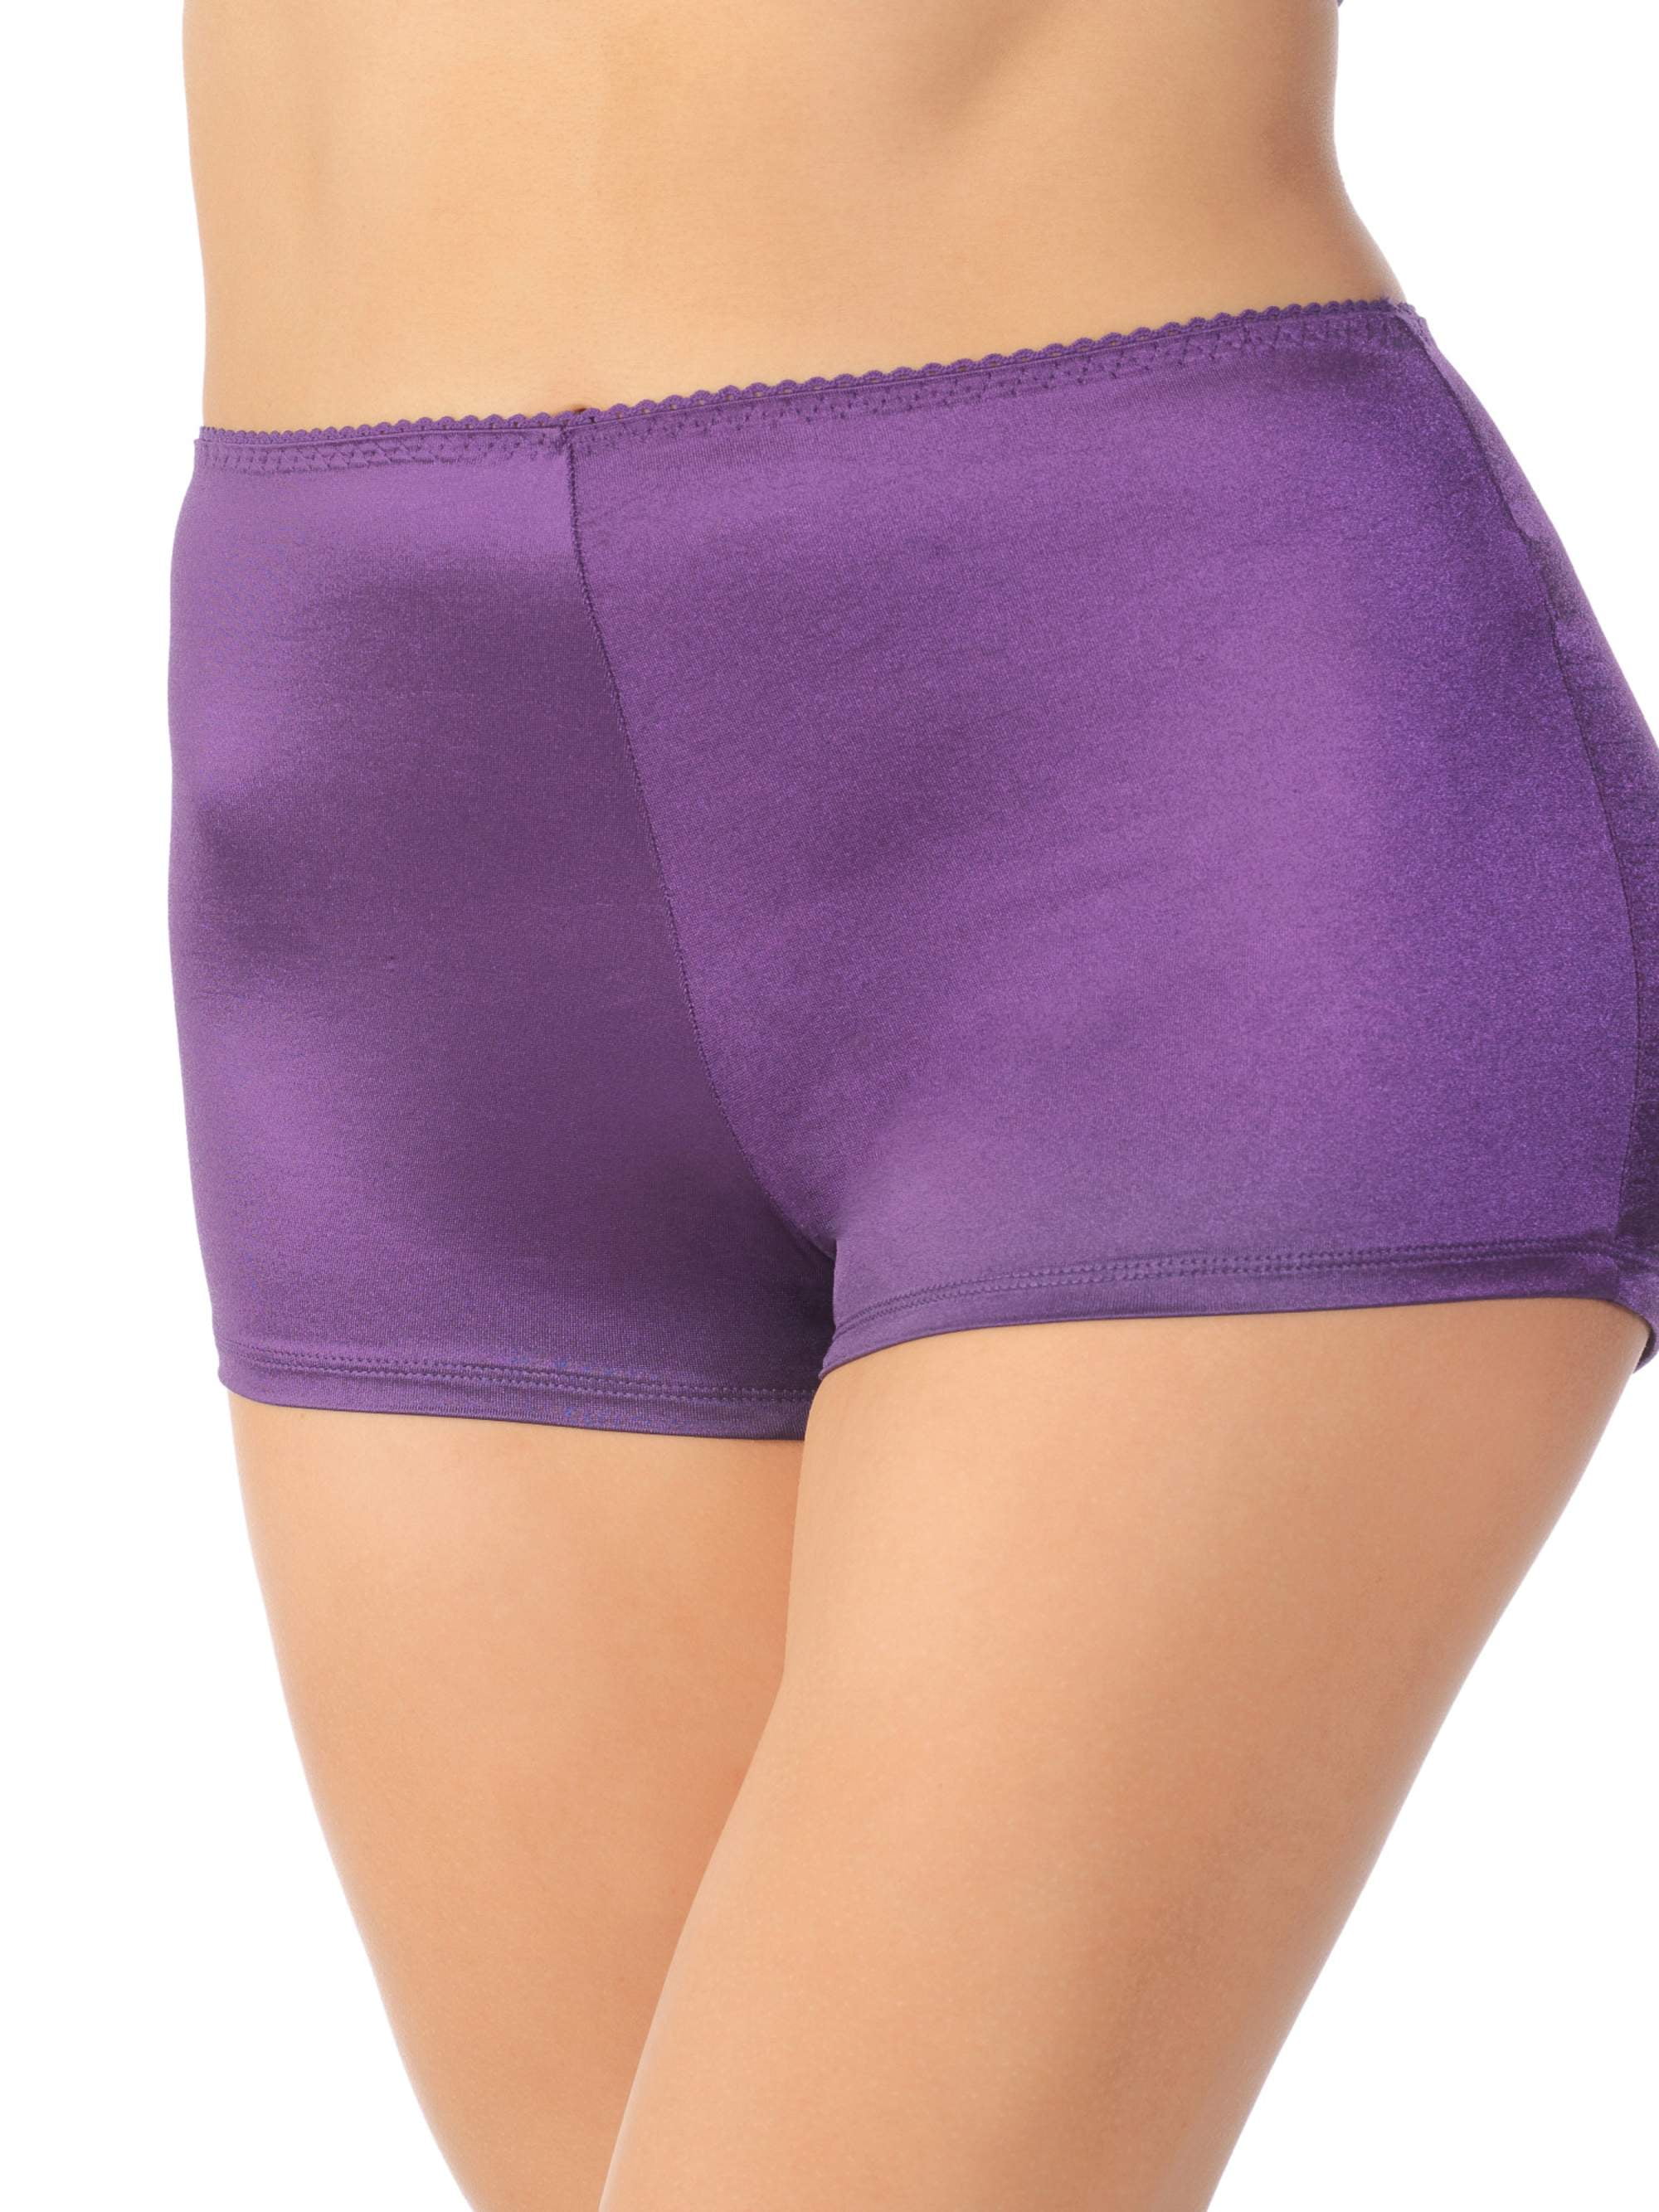 Vassarette Women's Undershapers Light Control Brief Panty, Style 4840001 